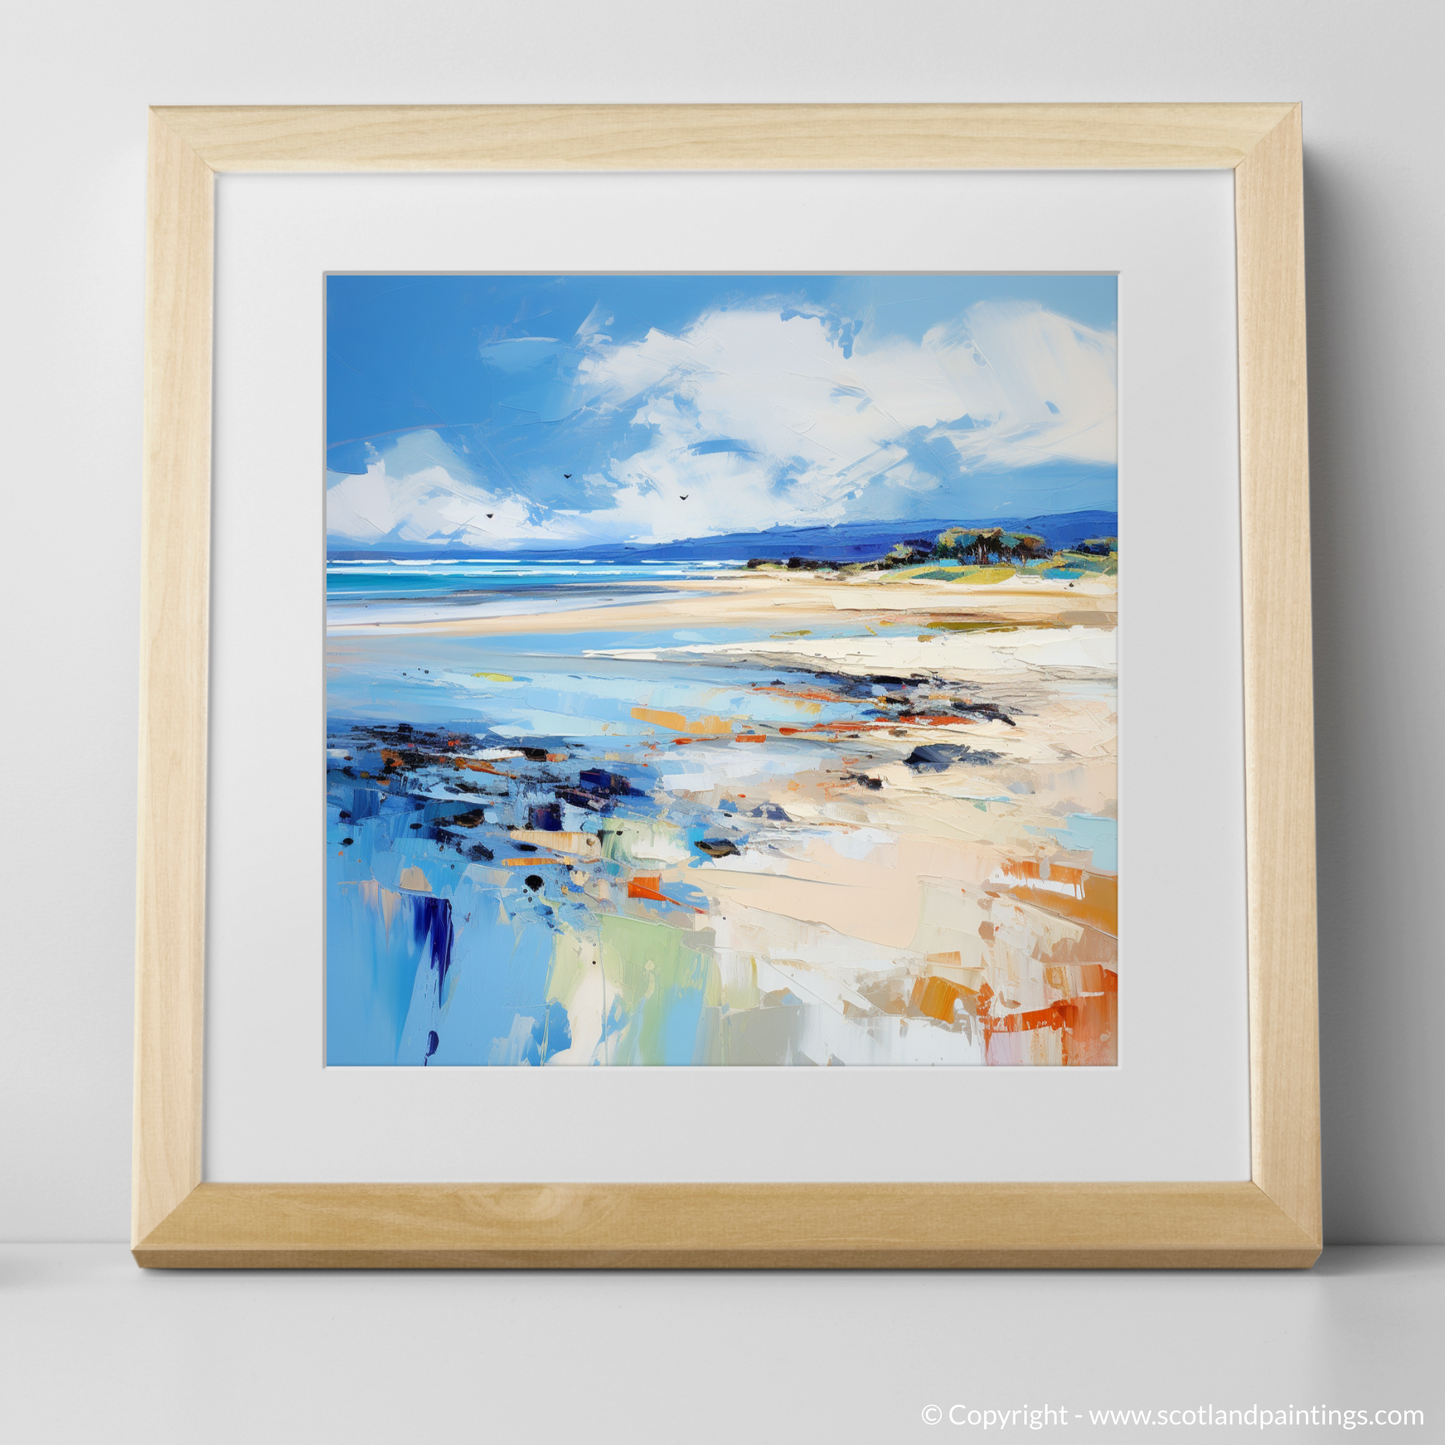 Art Print of Nairn Beach, Nairn with a natural frame